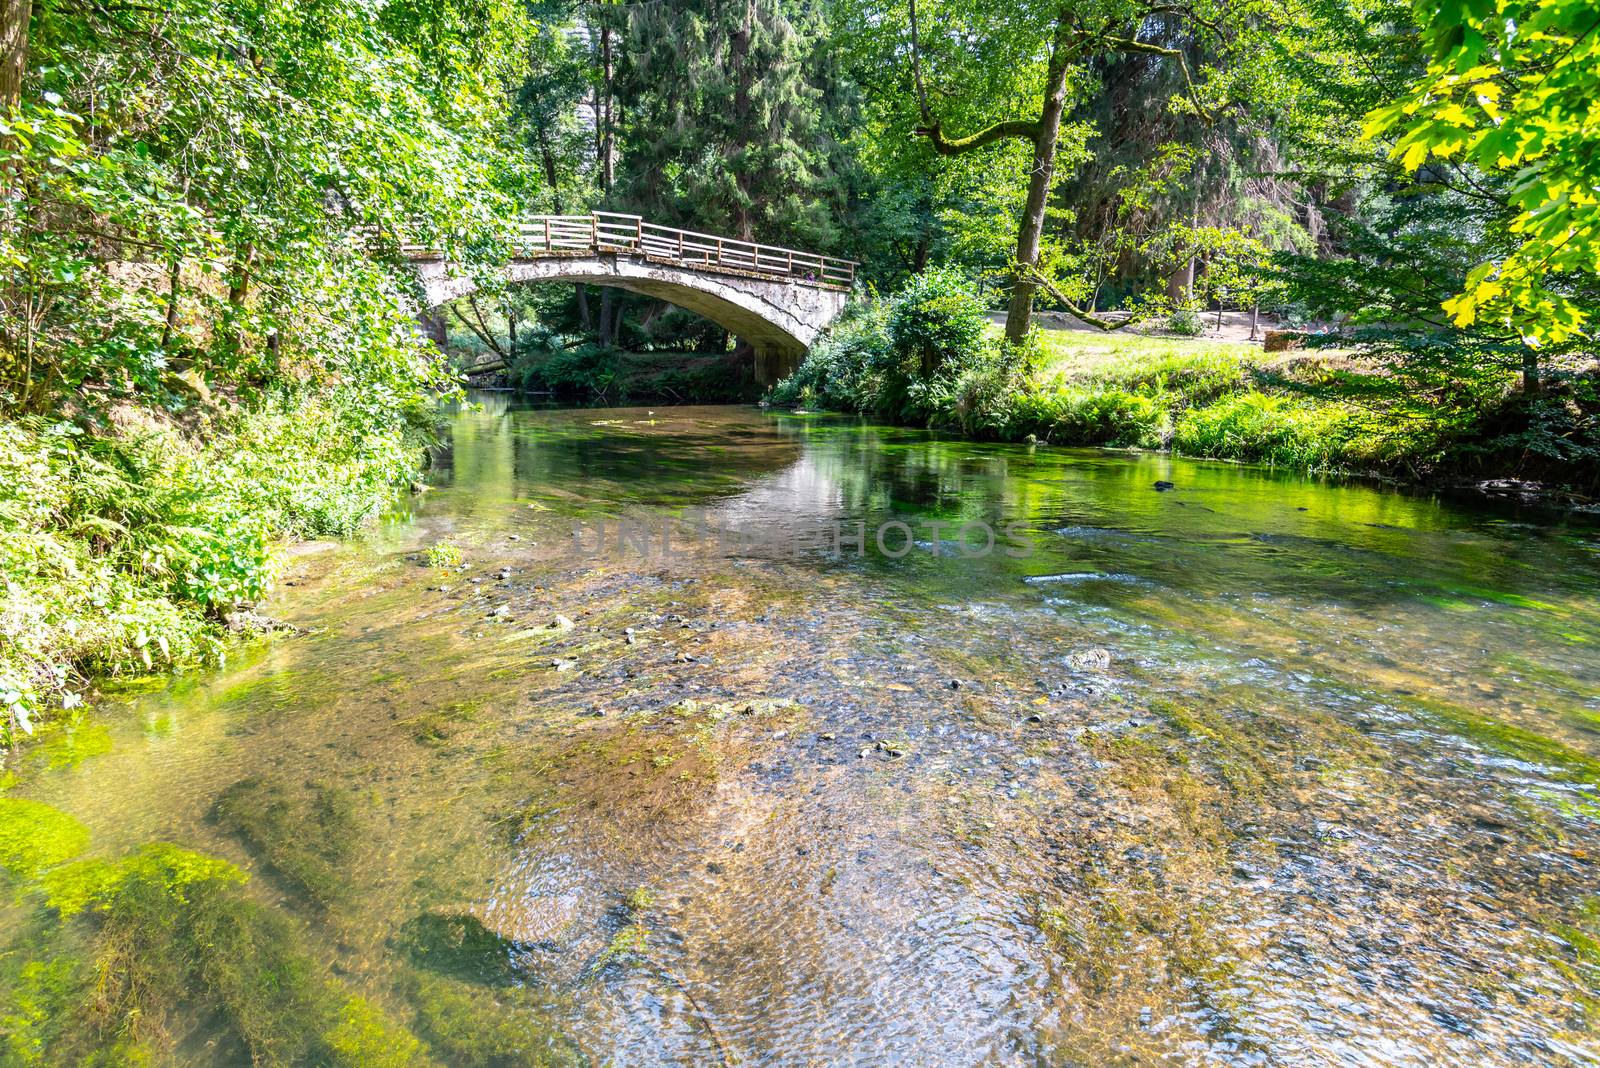 Bridge over river Kamenice in Bohemian Switzerland National Park, Czech Republic.